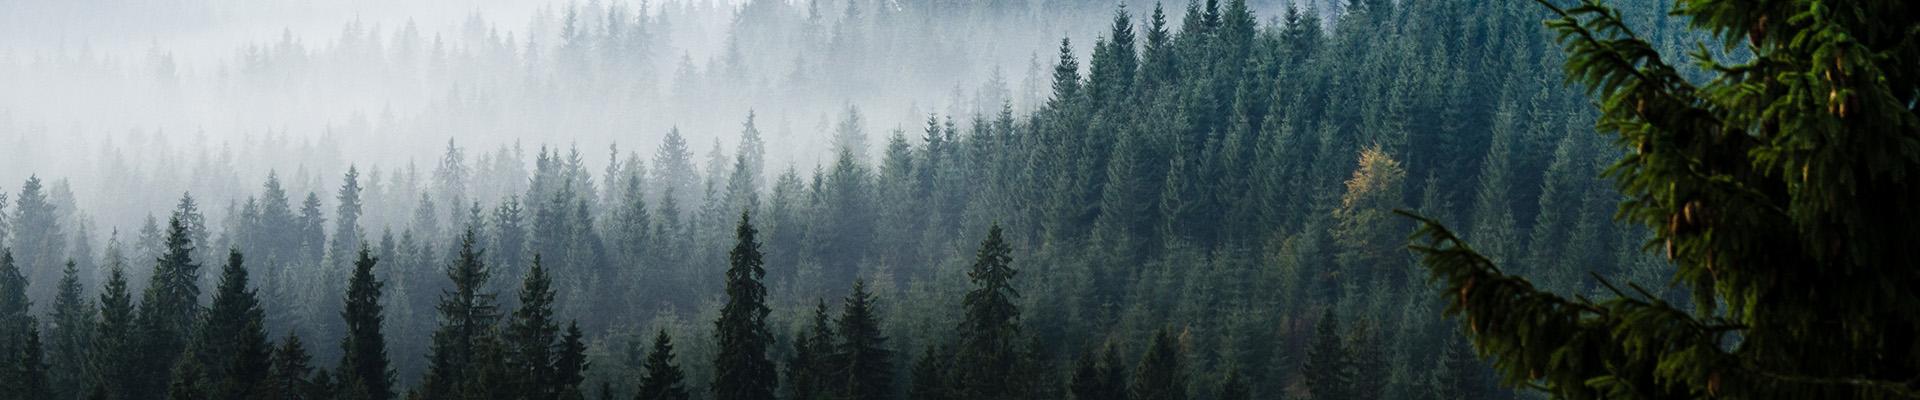 Green woods in fog